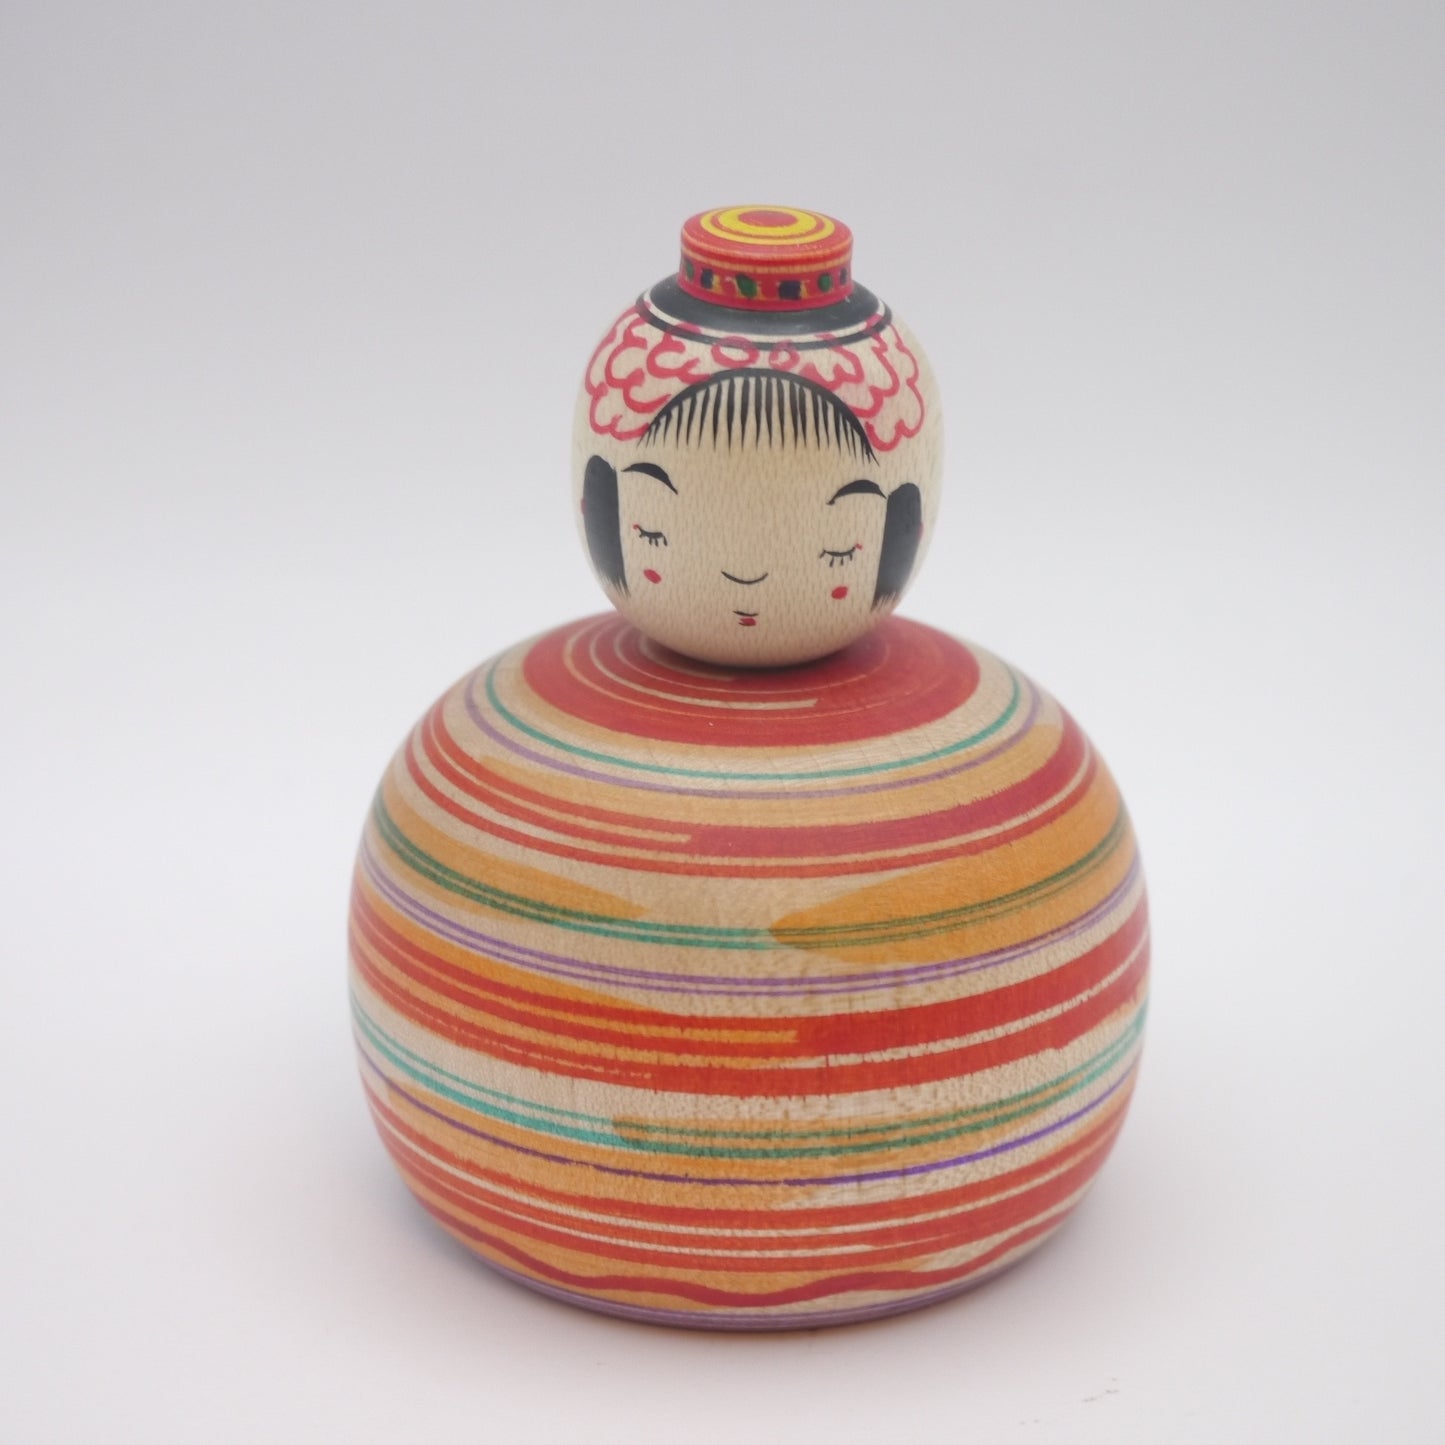 Kawaii Kokeshi doll by Kunitoshi Abe